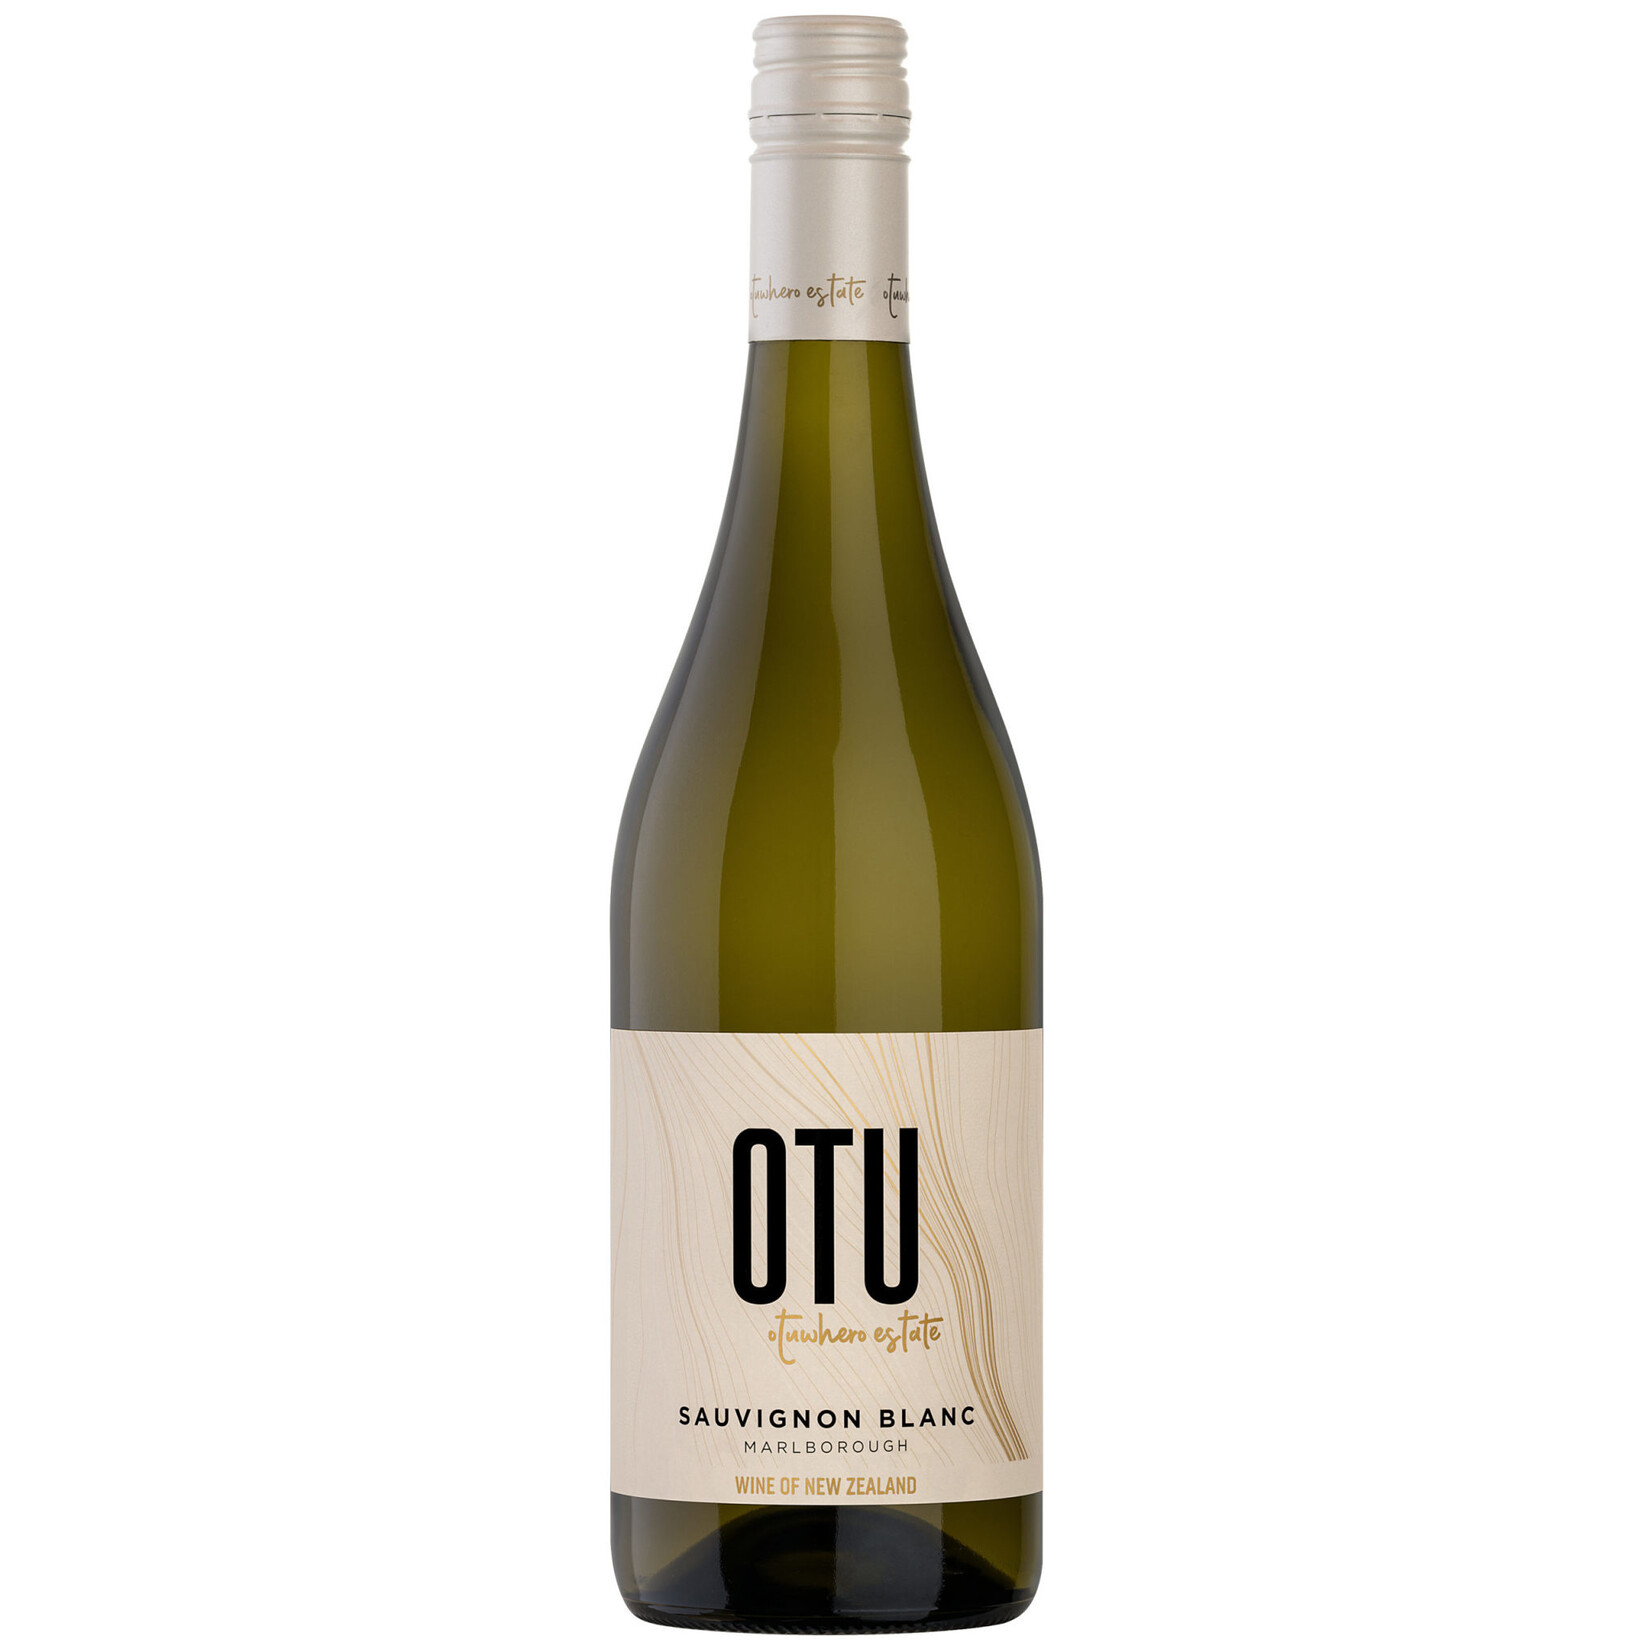 OTU Wines OTU Otuwhero Sauvignon Blanc Estate Grown 2022  Awatere Valley New Zealand